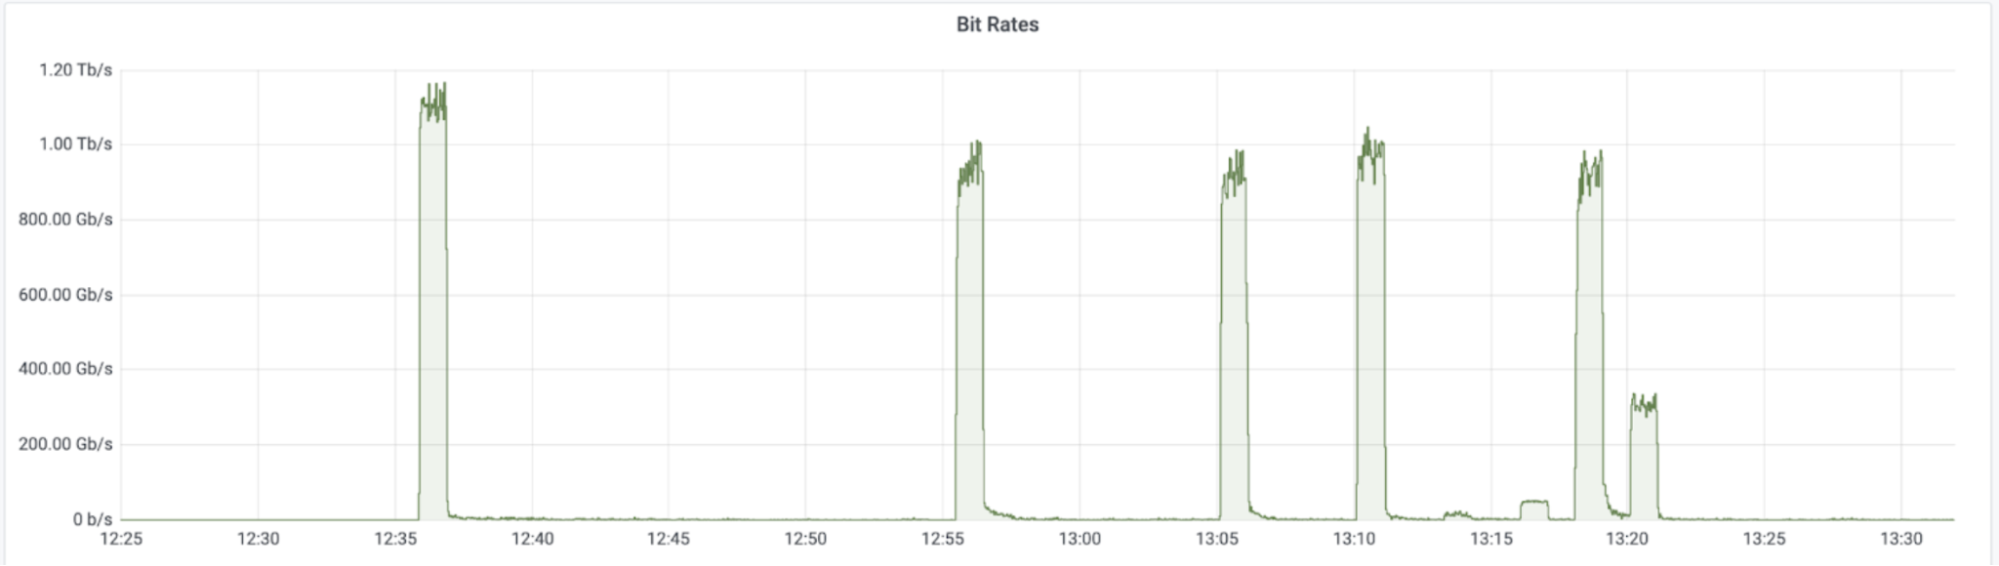 Graph of Mirai botnet attack peaking at 1.2 Tbps